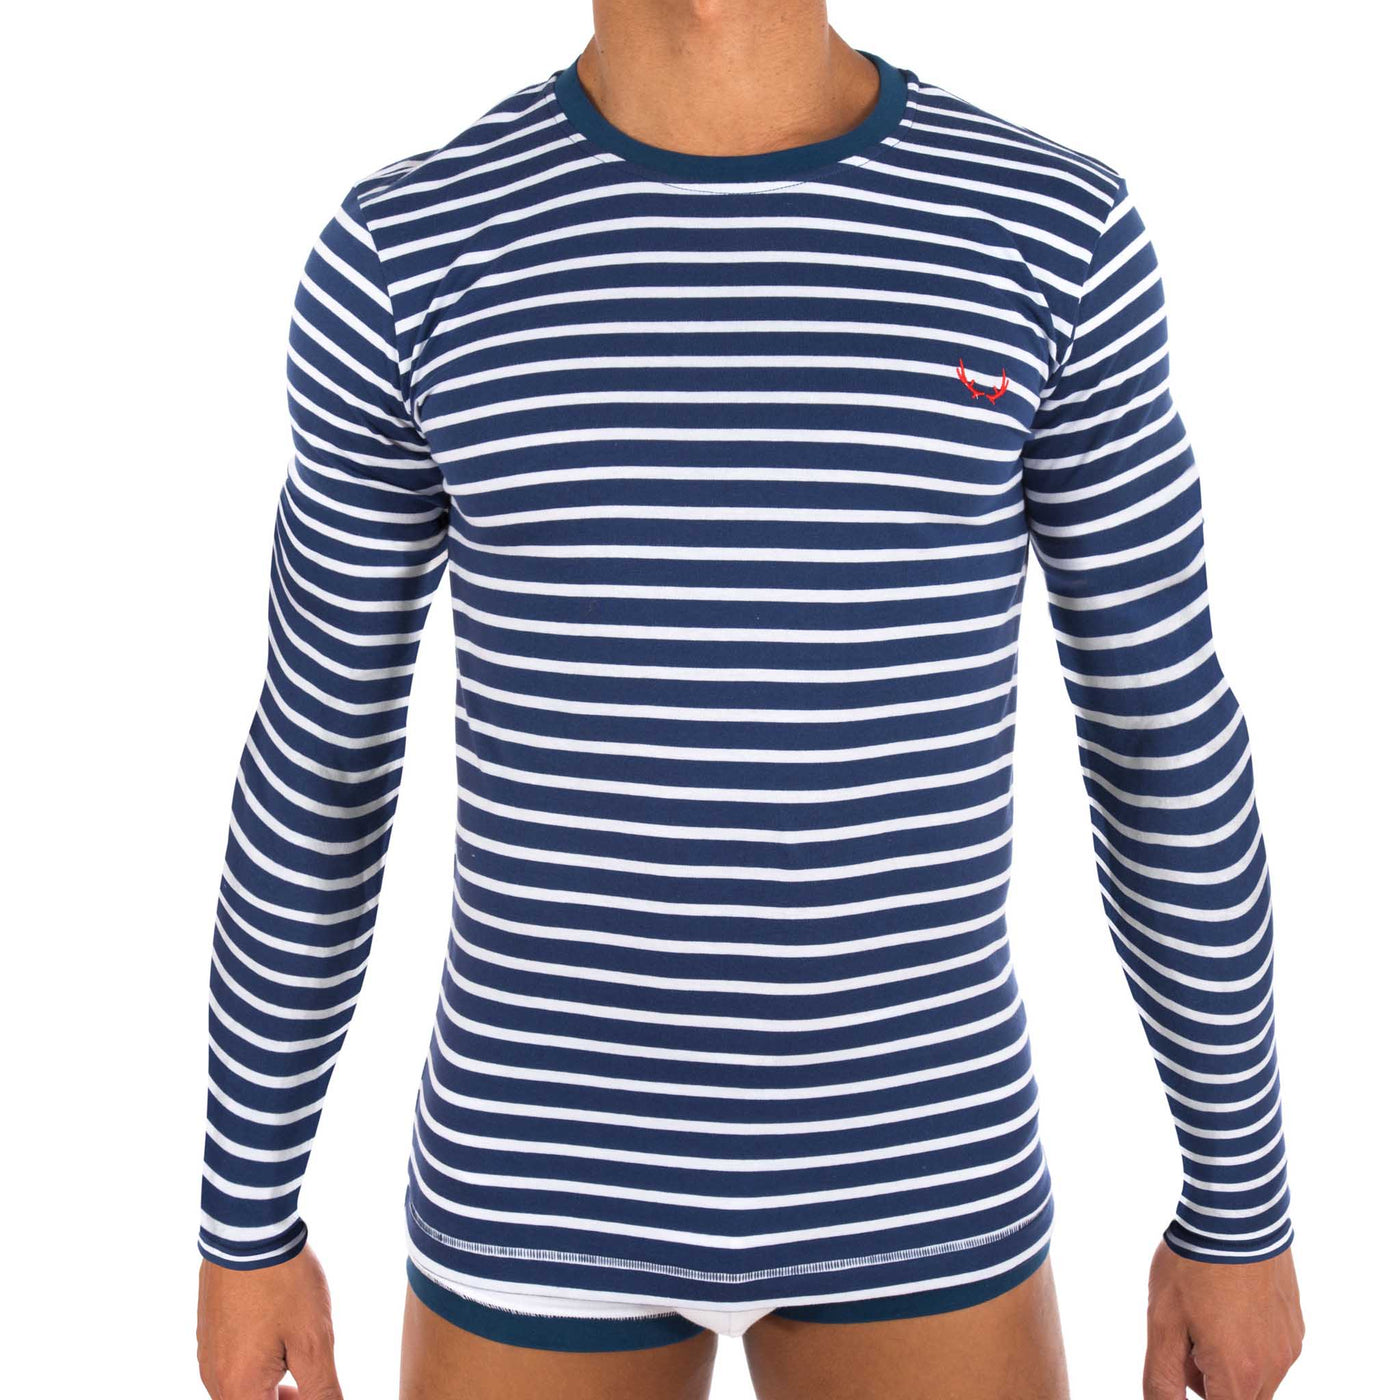 Long sleeves navy T-shirt - white stripes